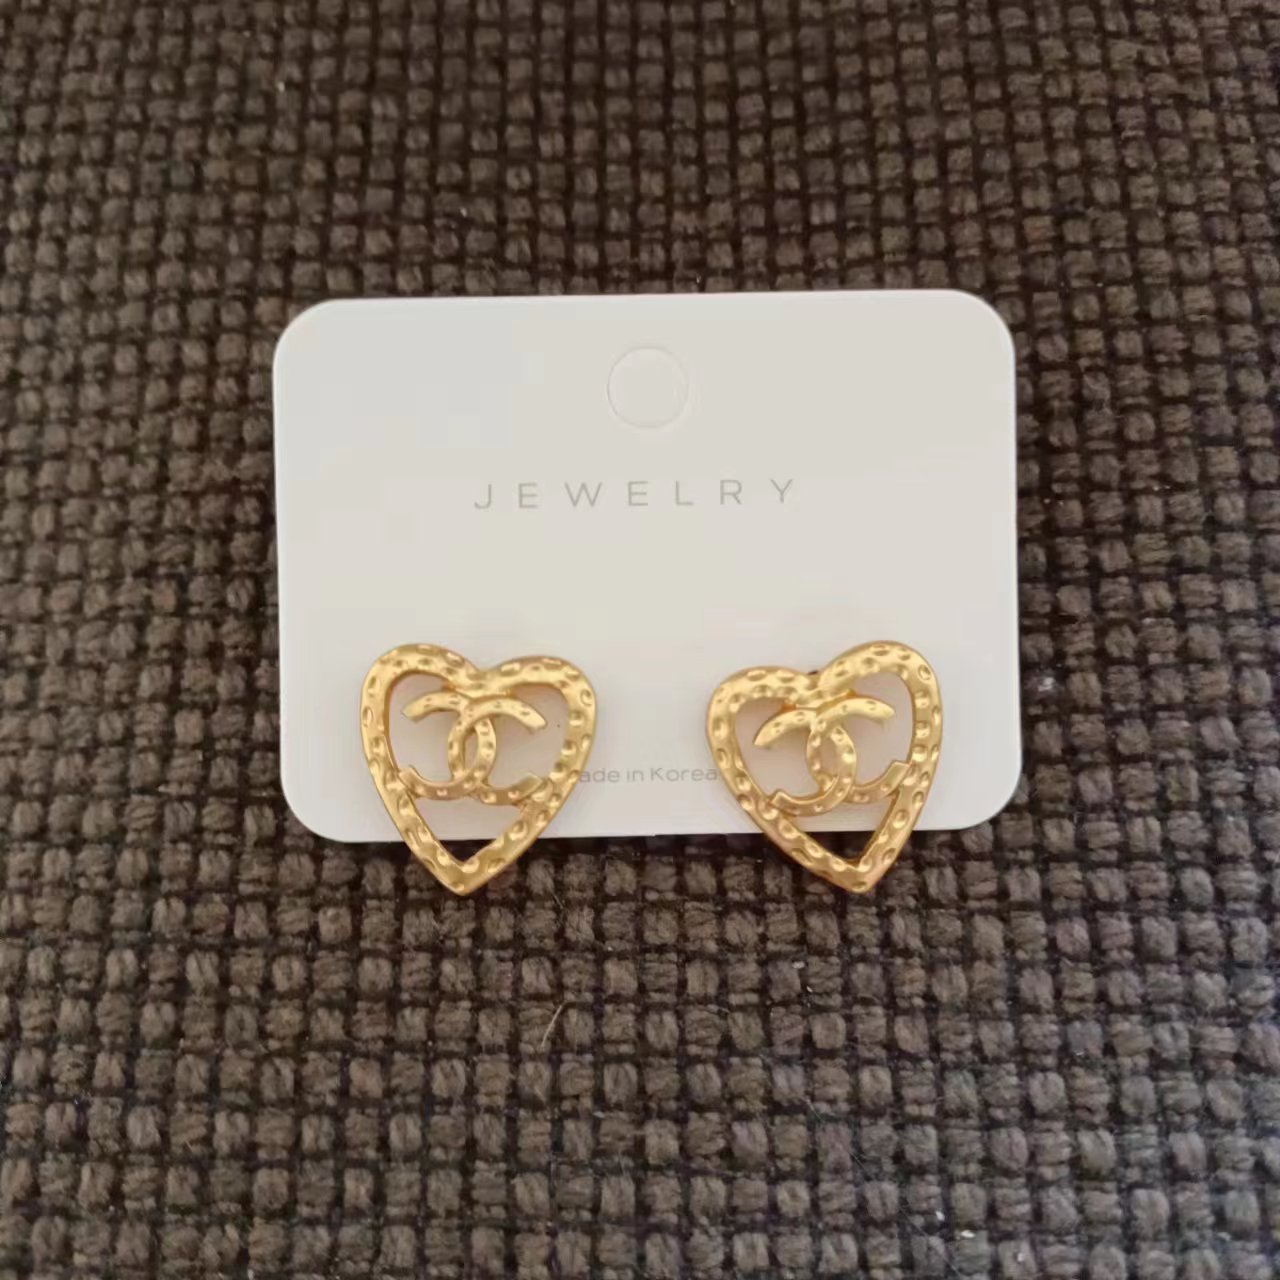 Special sale! New Chanel hollow heart earrings